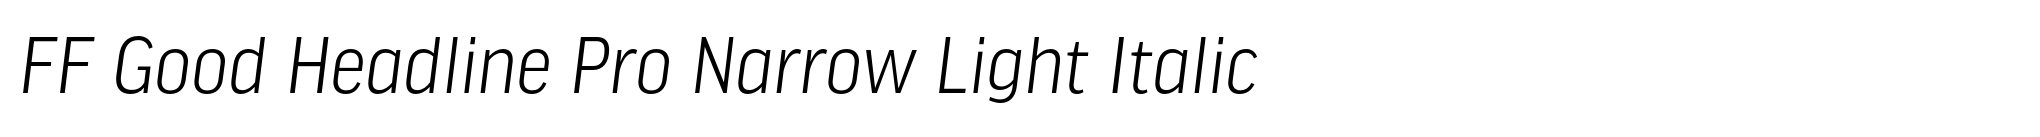 FF Good Headline Pro Narrow Light Italic image